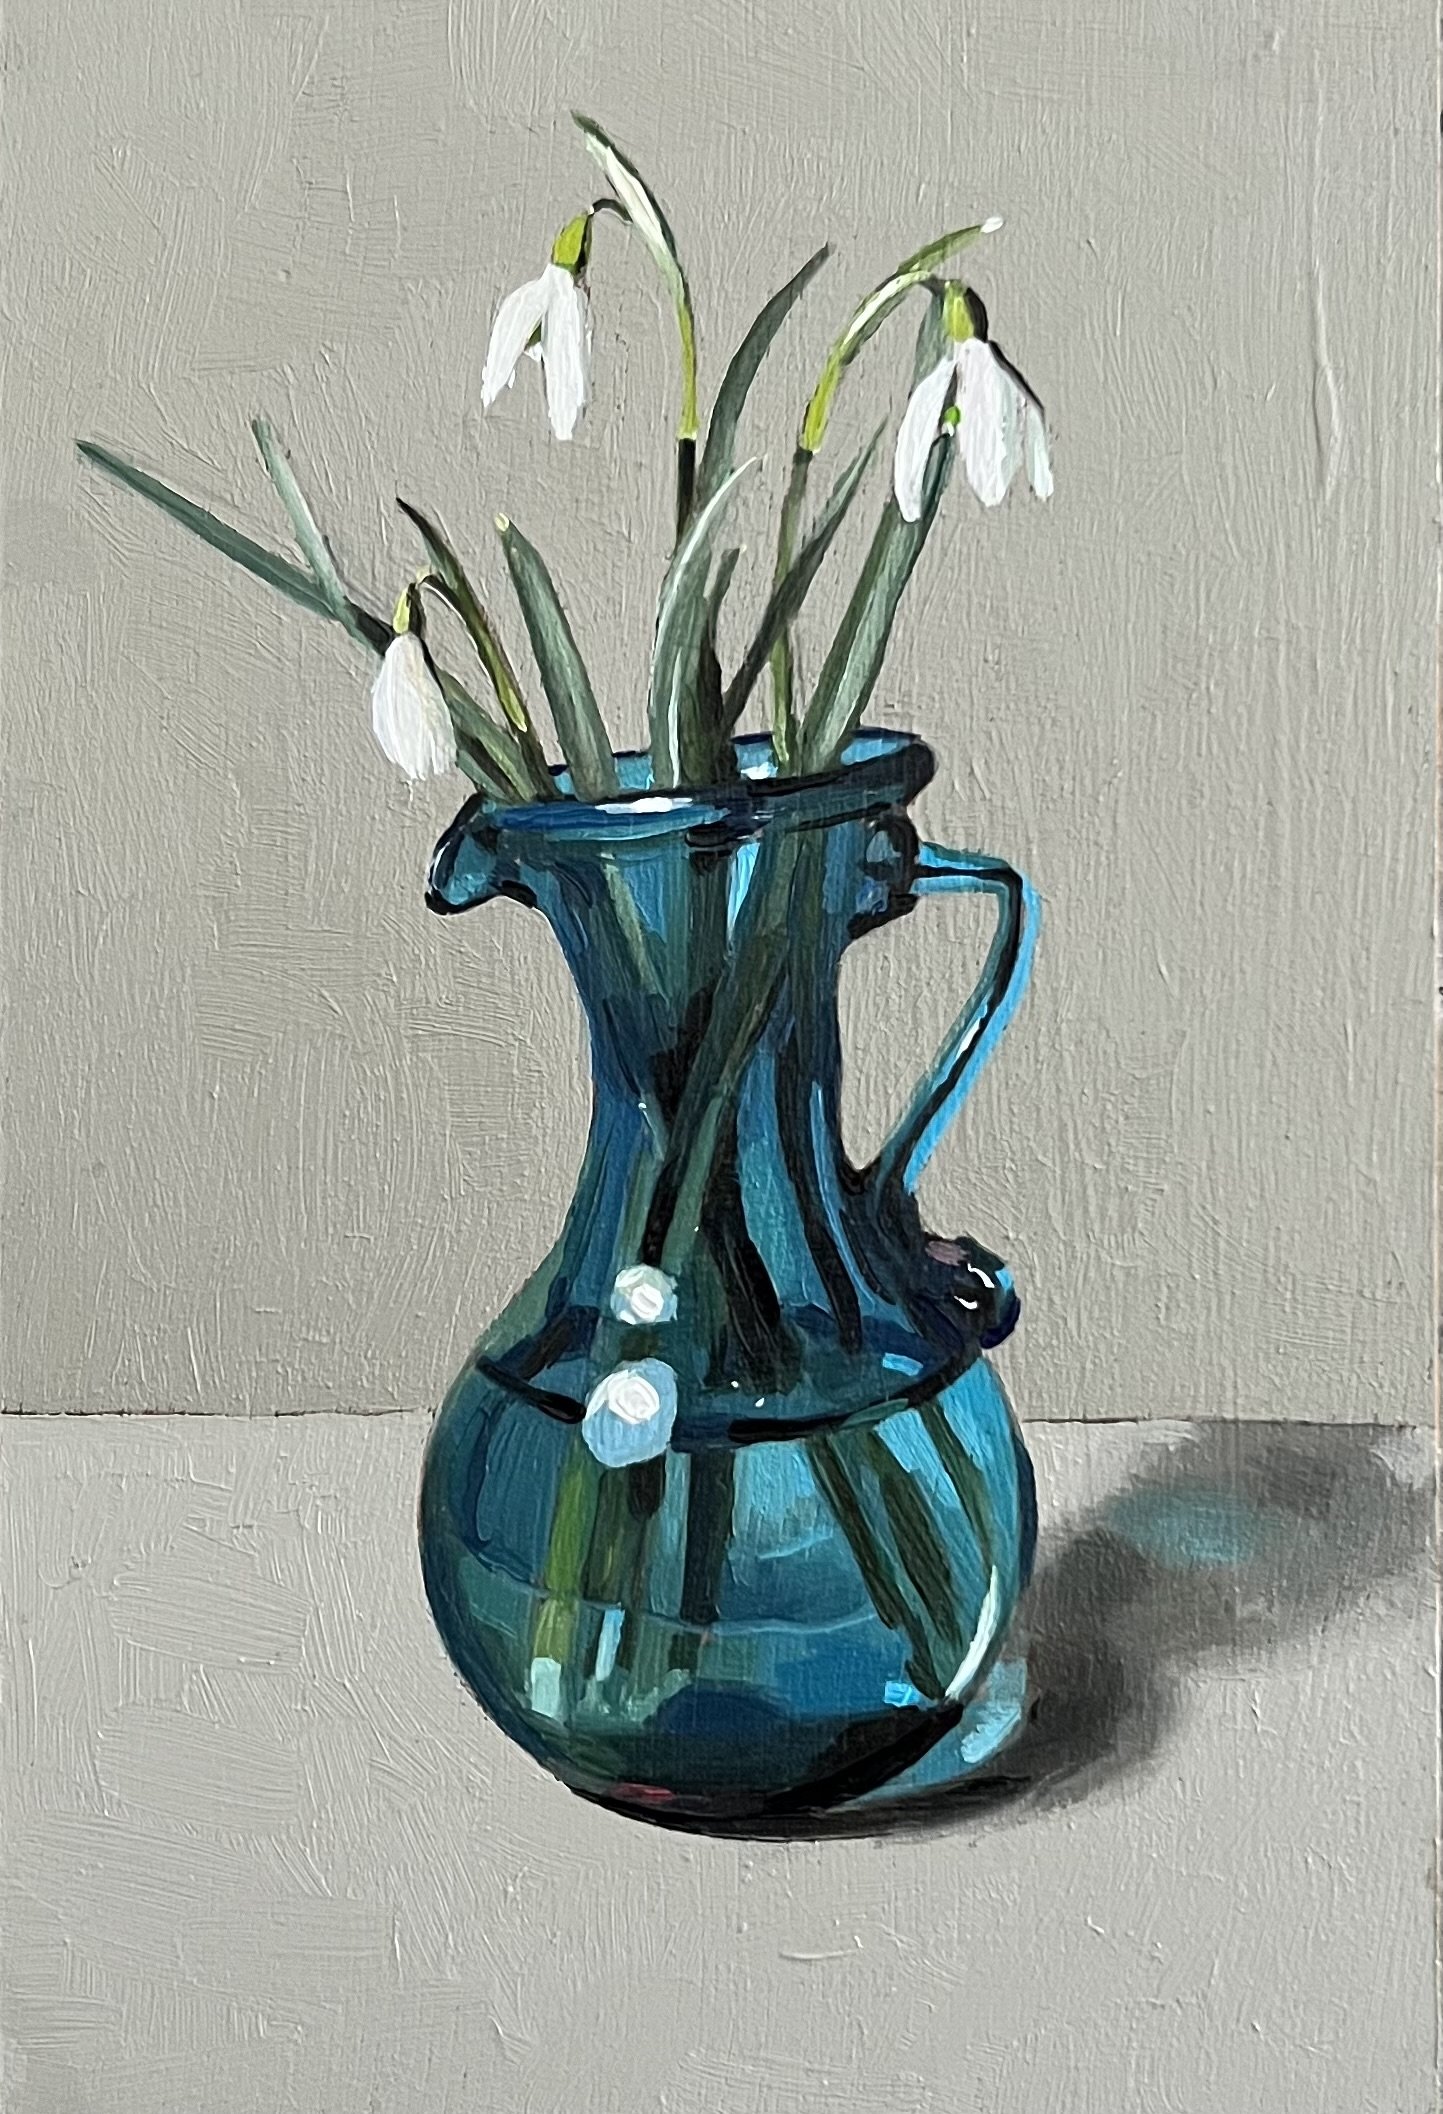 Snowdrops in blue vase